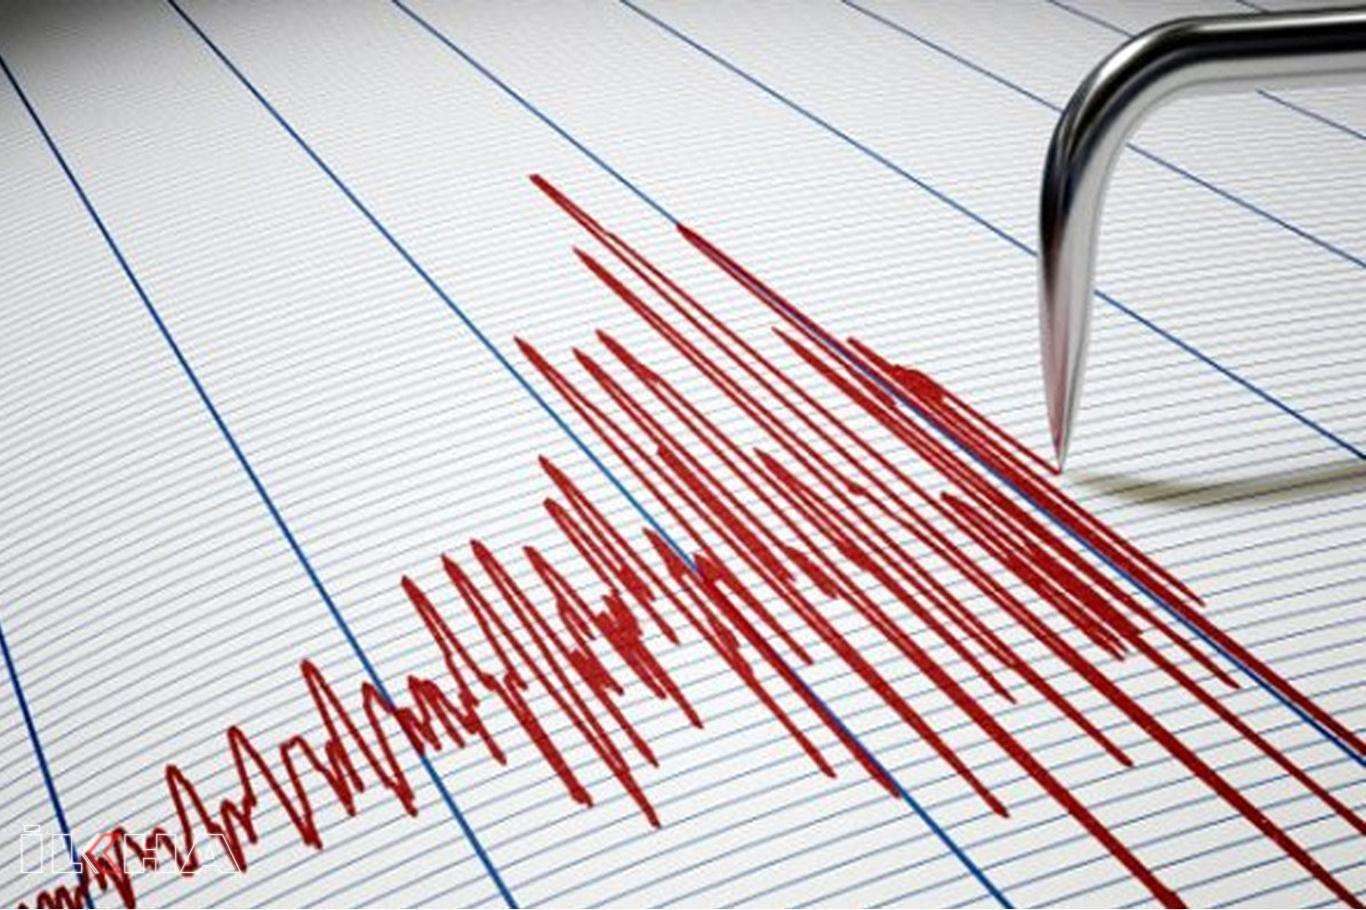 A 5.2 magnitude earthquake hits northeastern Syria